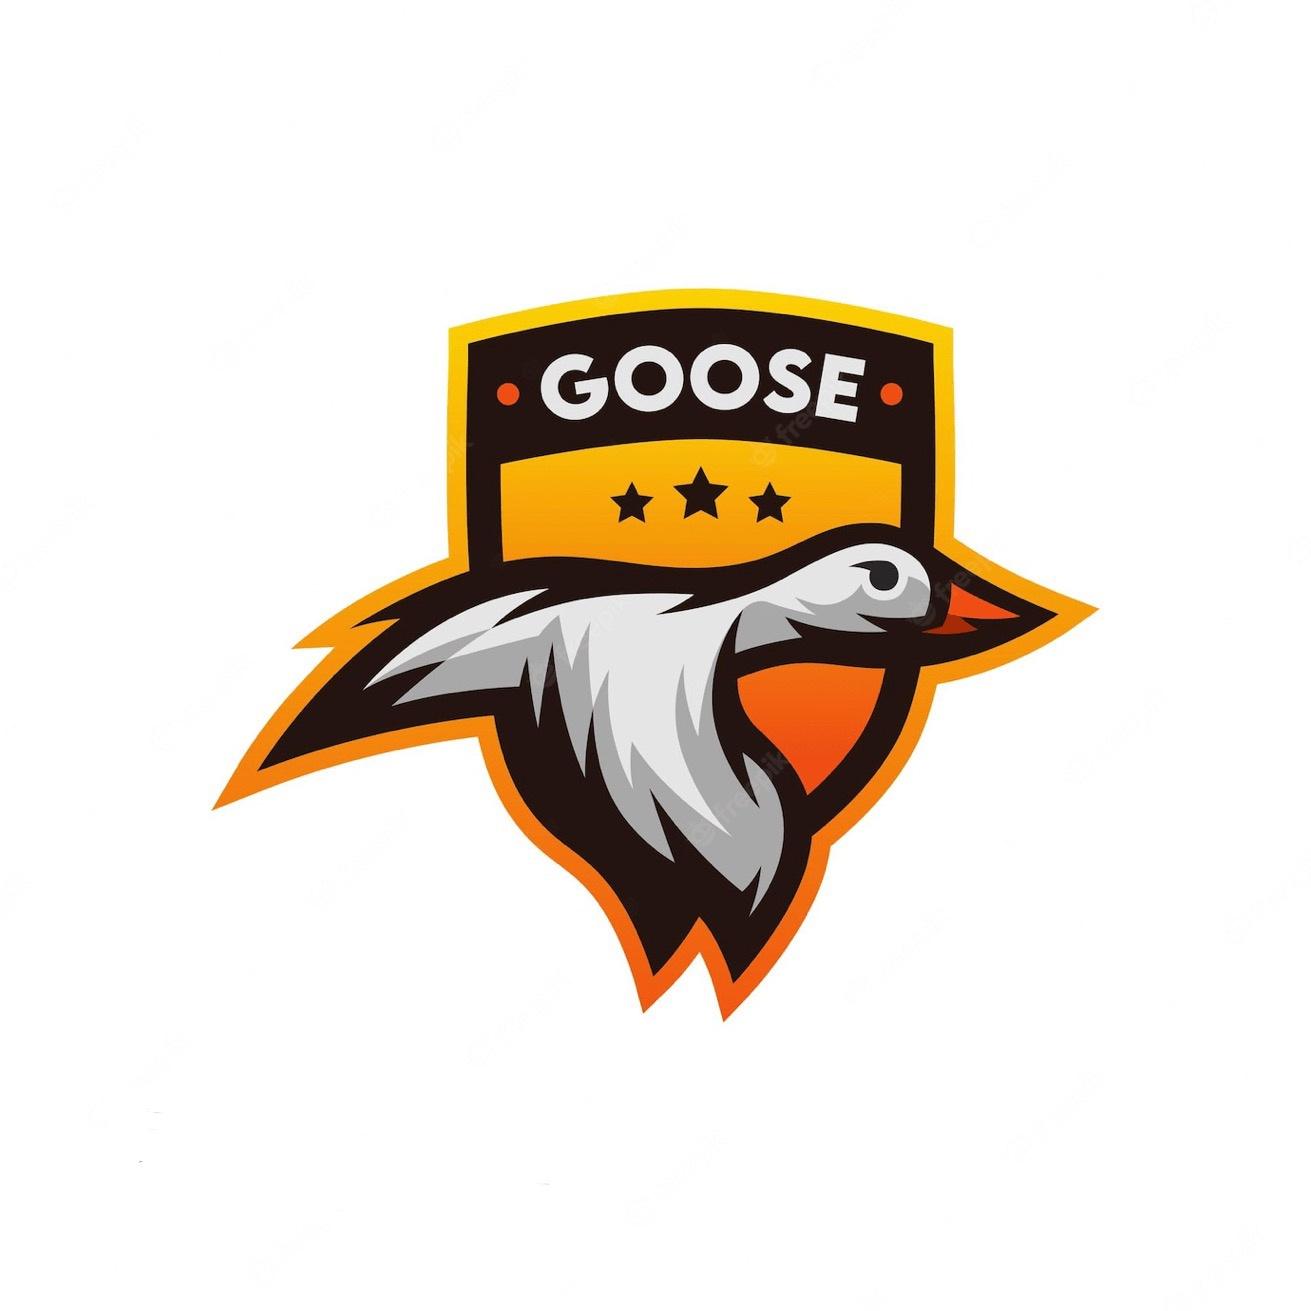 FG logo goose